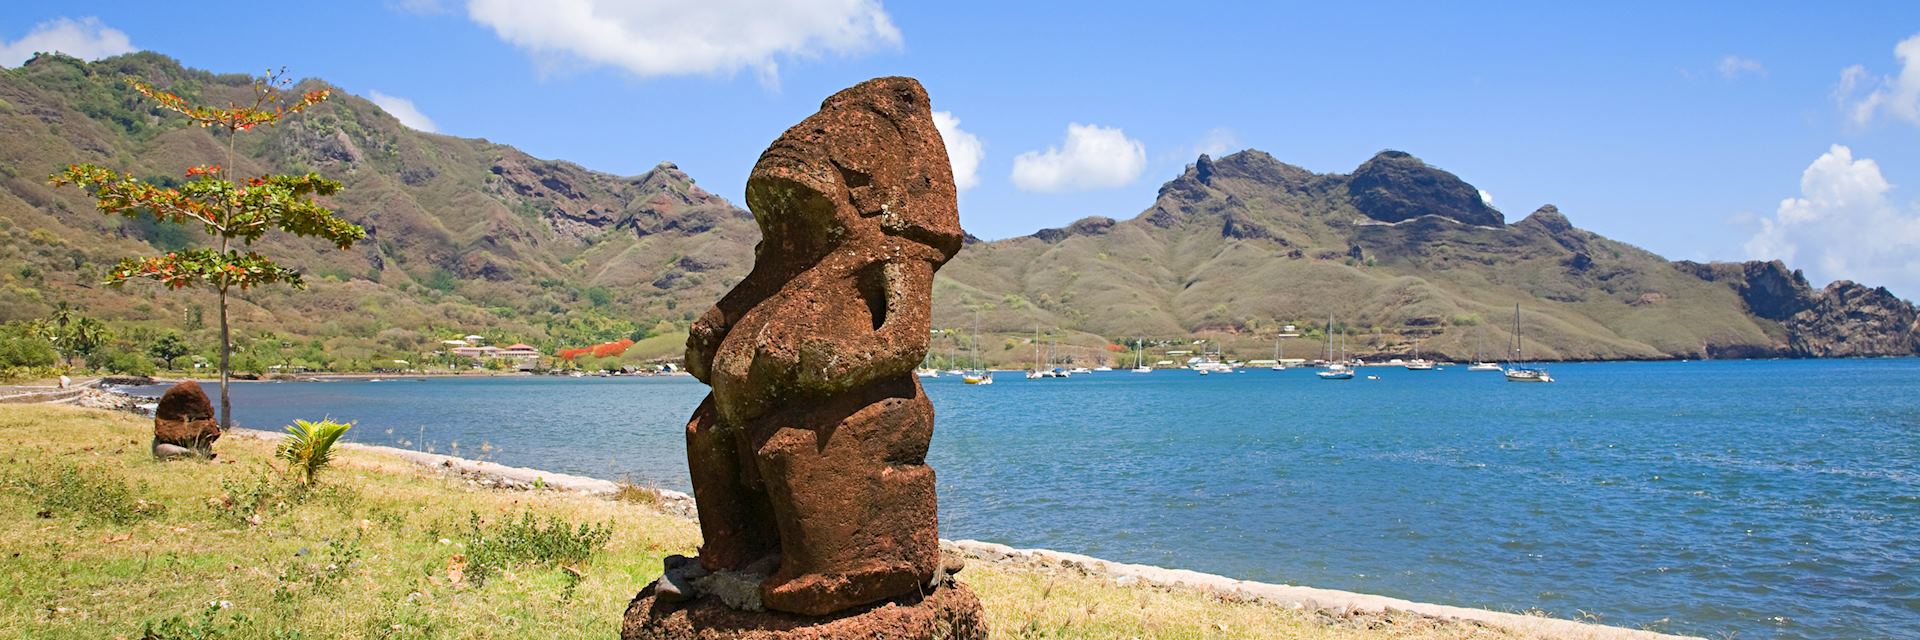 Tiki sculpture, Nuku Hiva